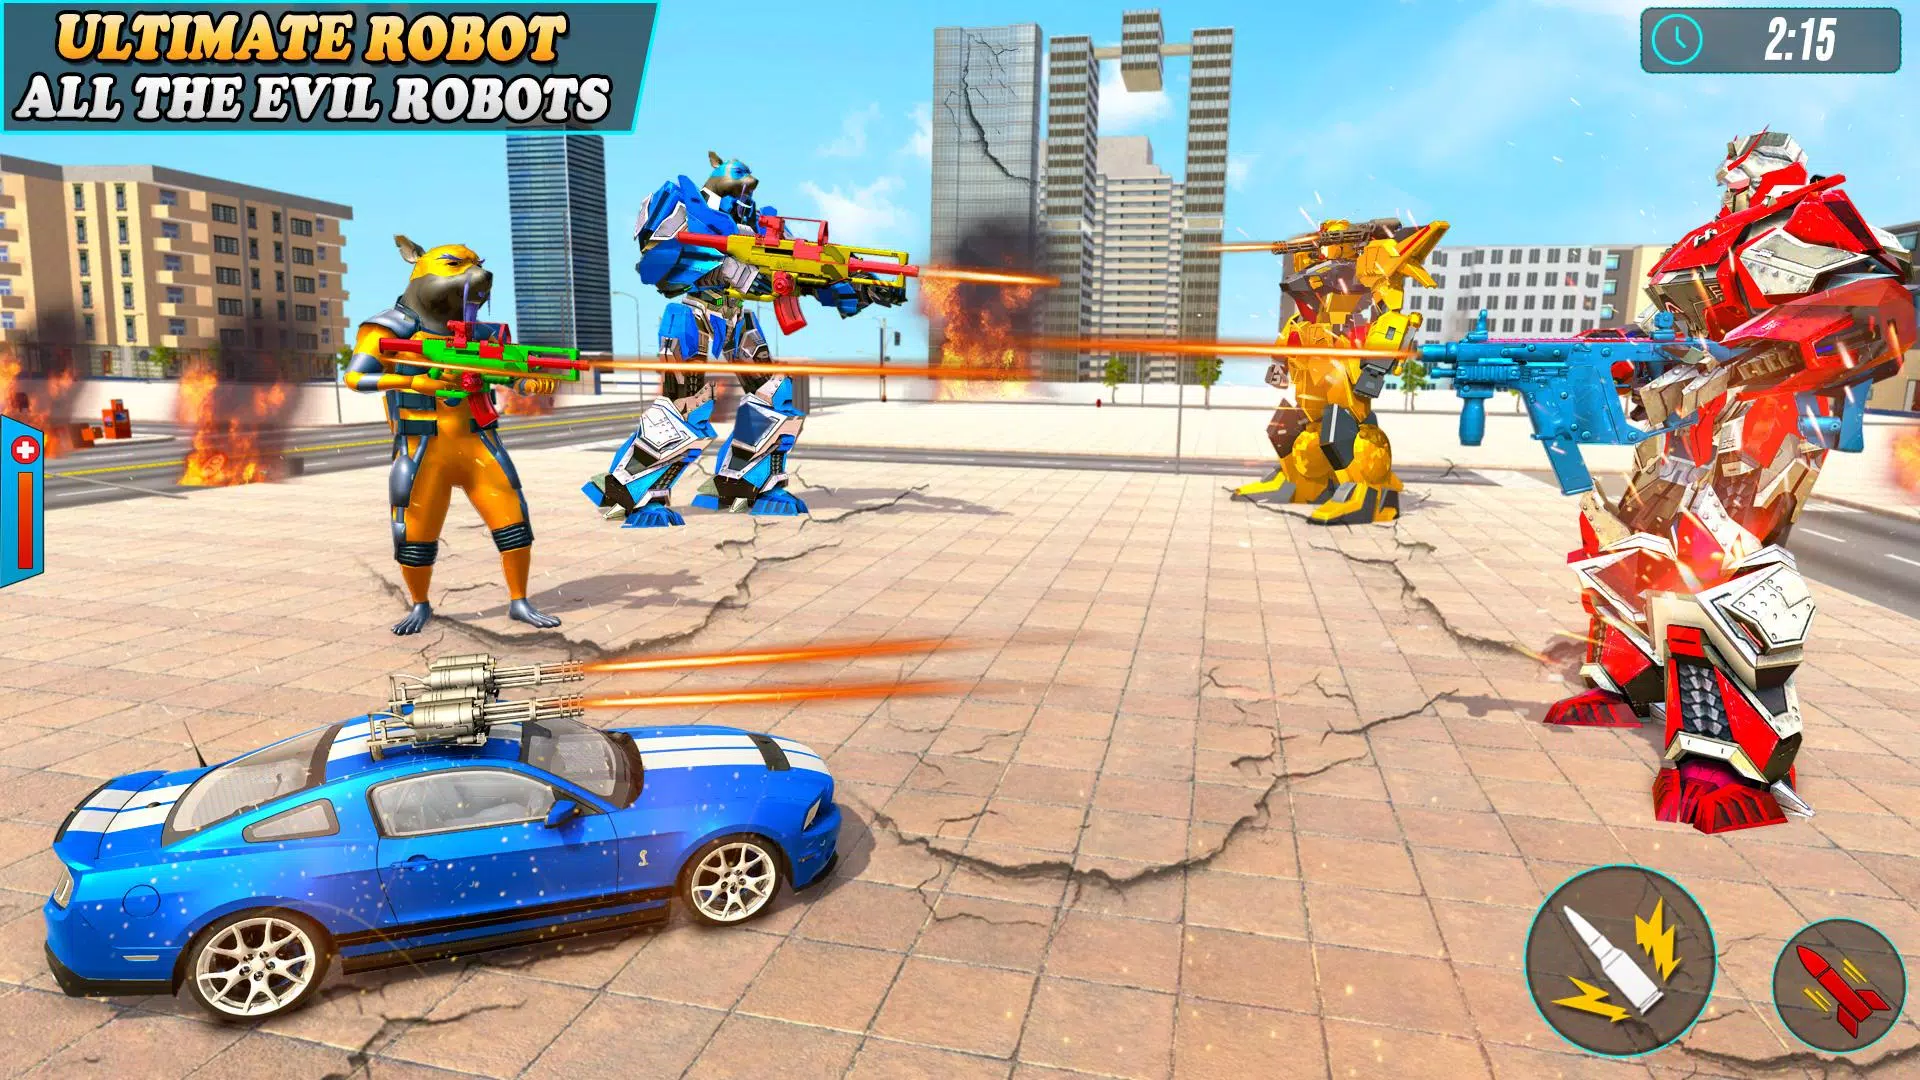 Rat Robot Car Game - Robot Transforming Games APK for Android Download